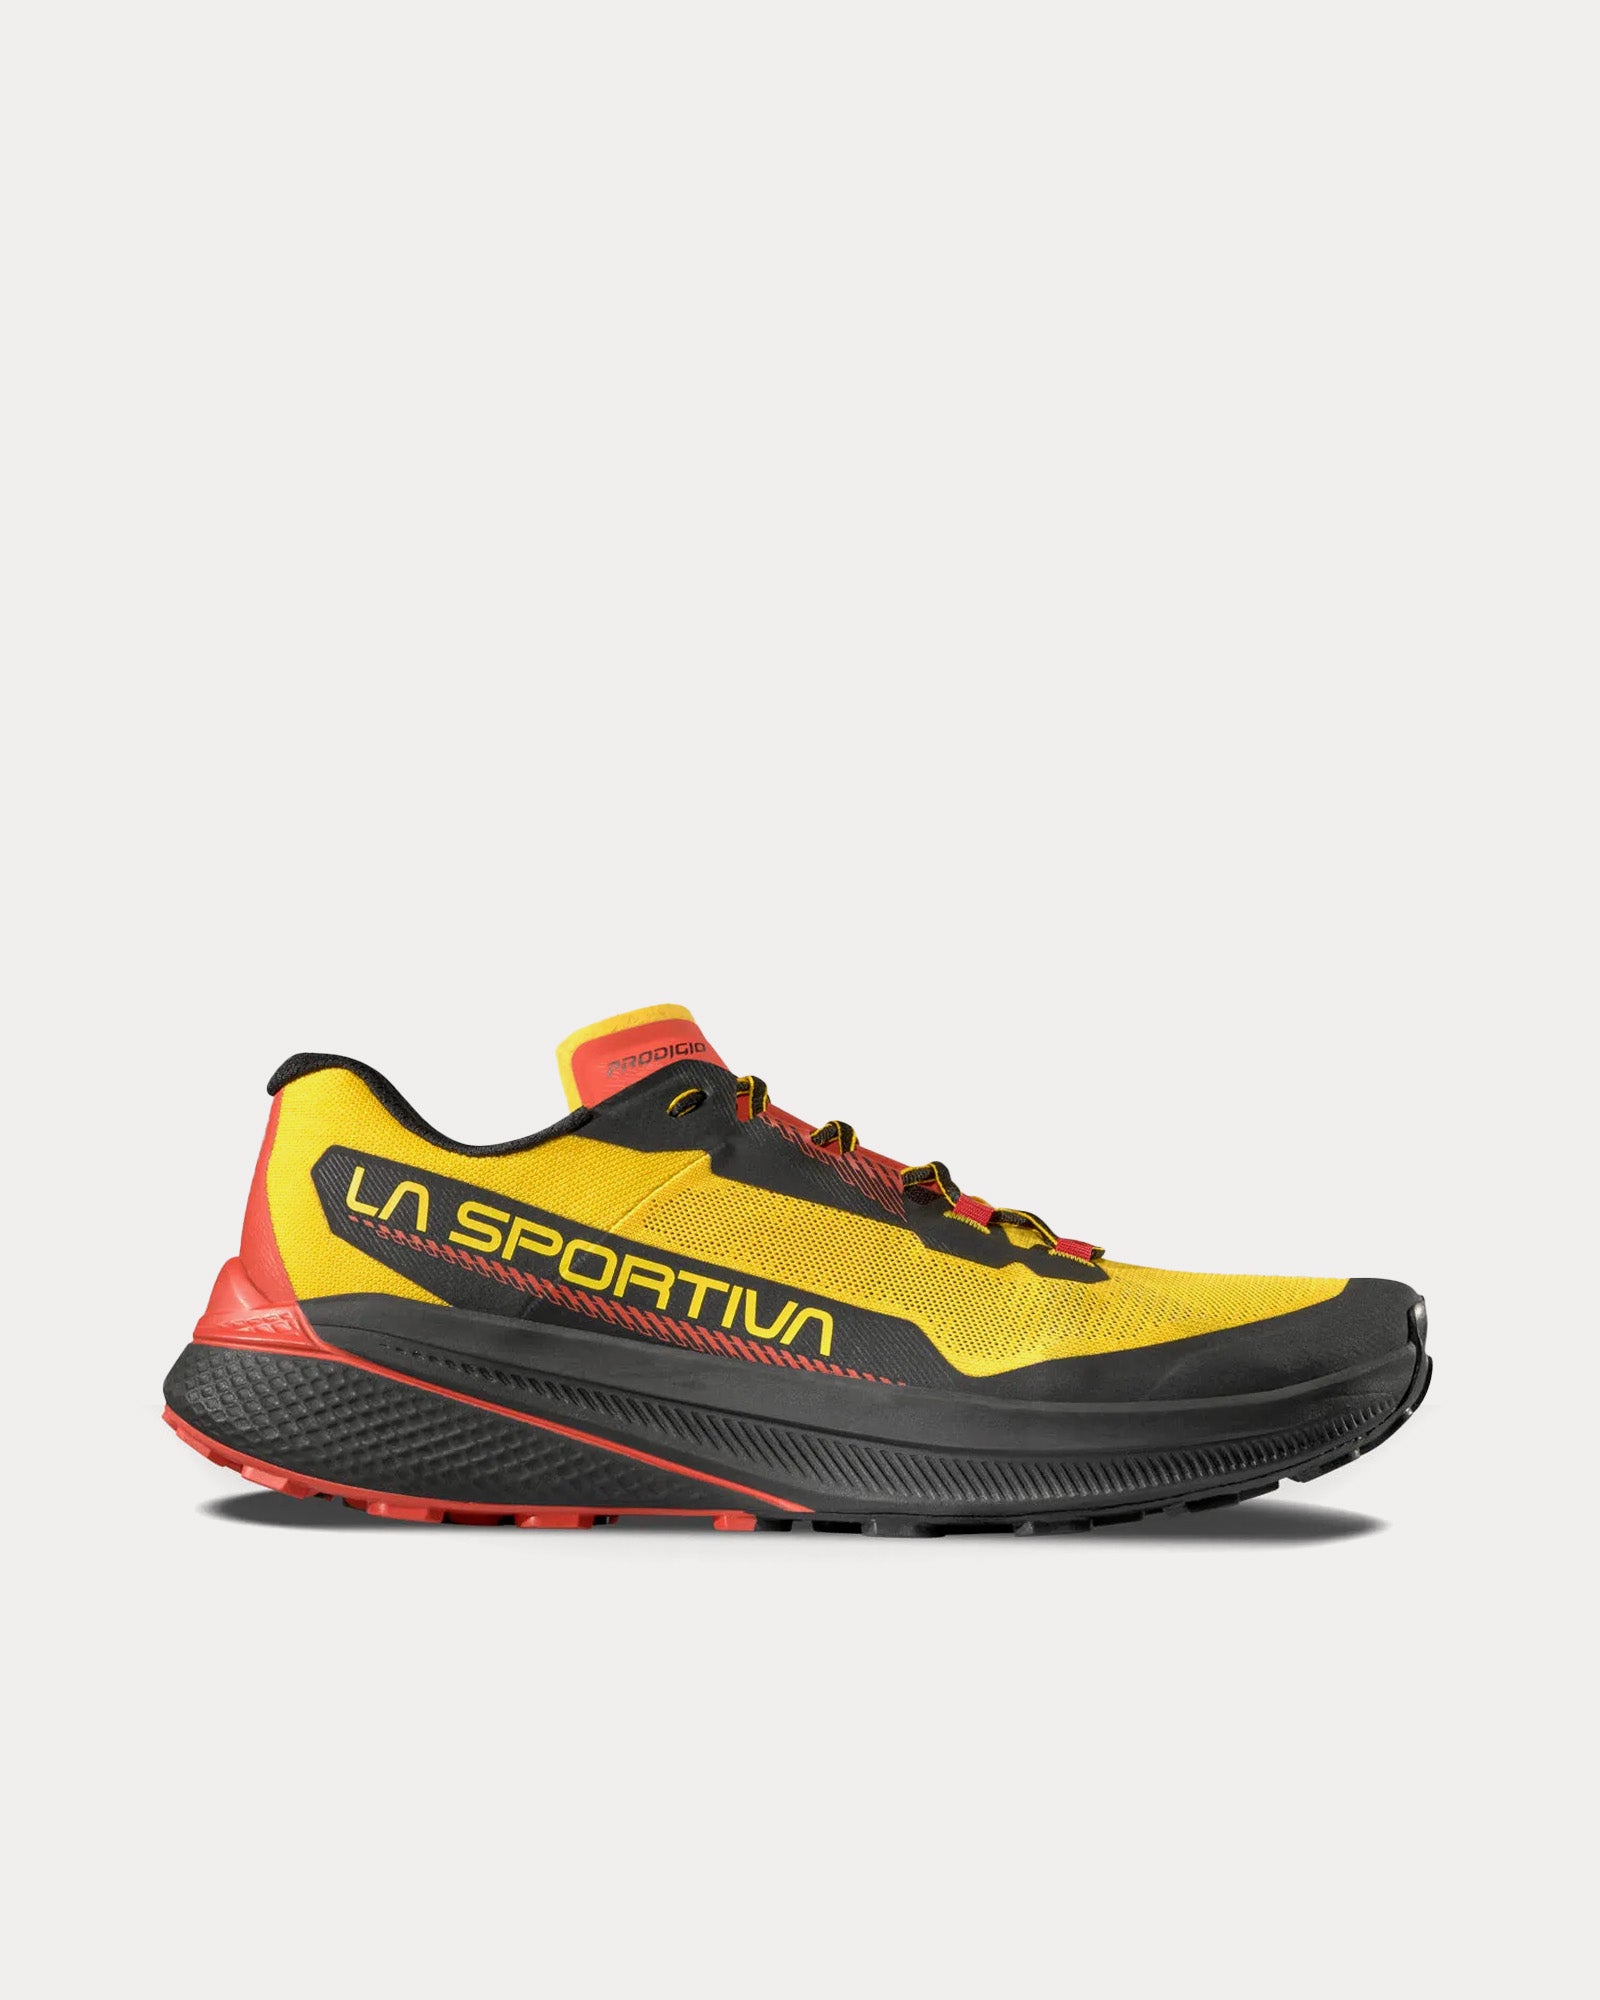 La Sportiva - Prodigio Yellow / Black Running Shoes